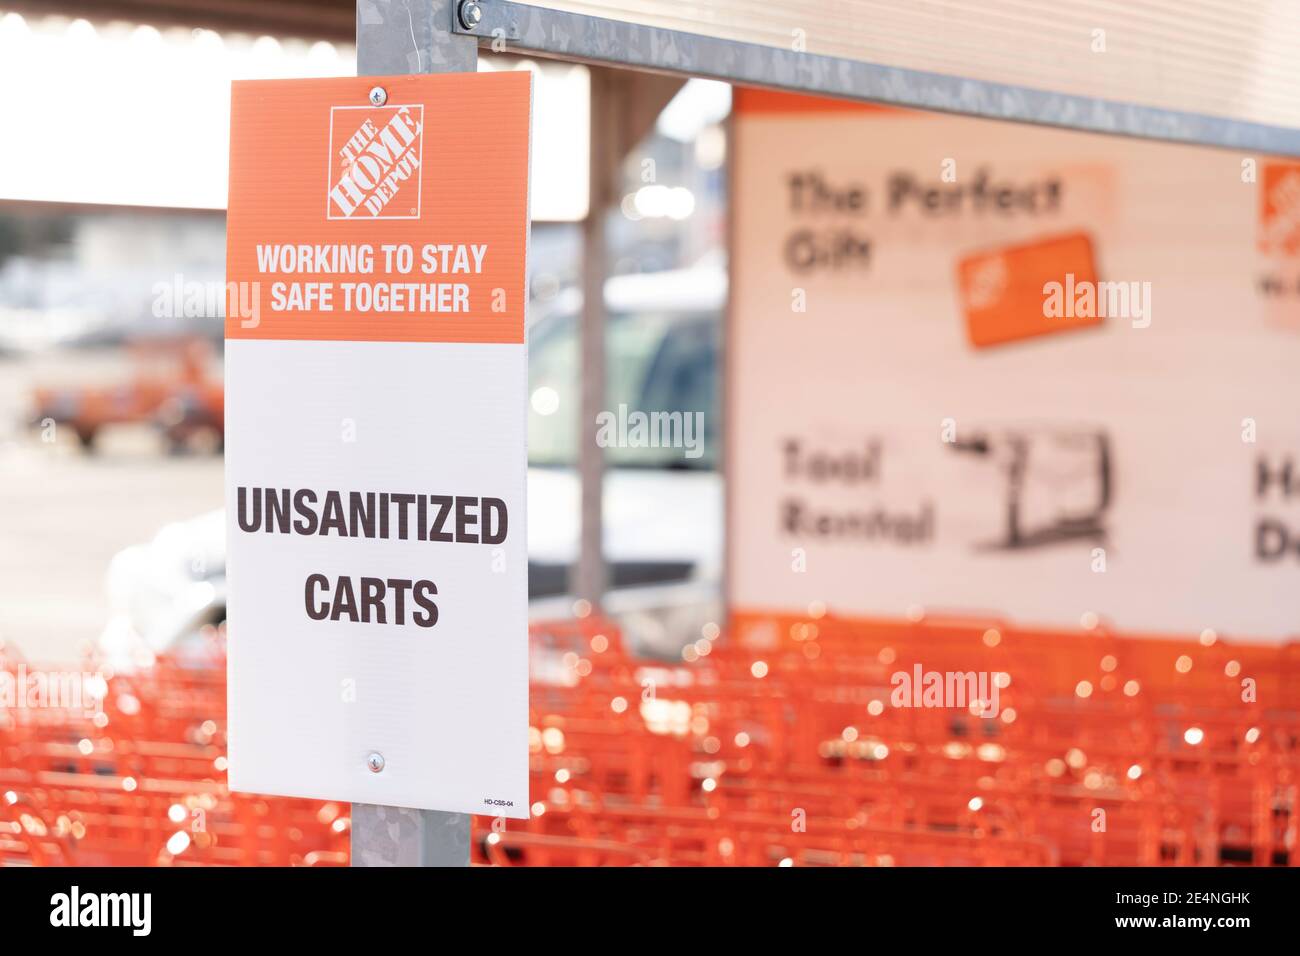 January 16 2021 - Calgary , Alberta Canada - Unsanitized Home depot orange shopping carts - Covid 19 pandemic measures Stock Photo